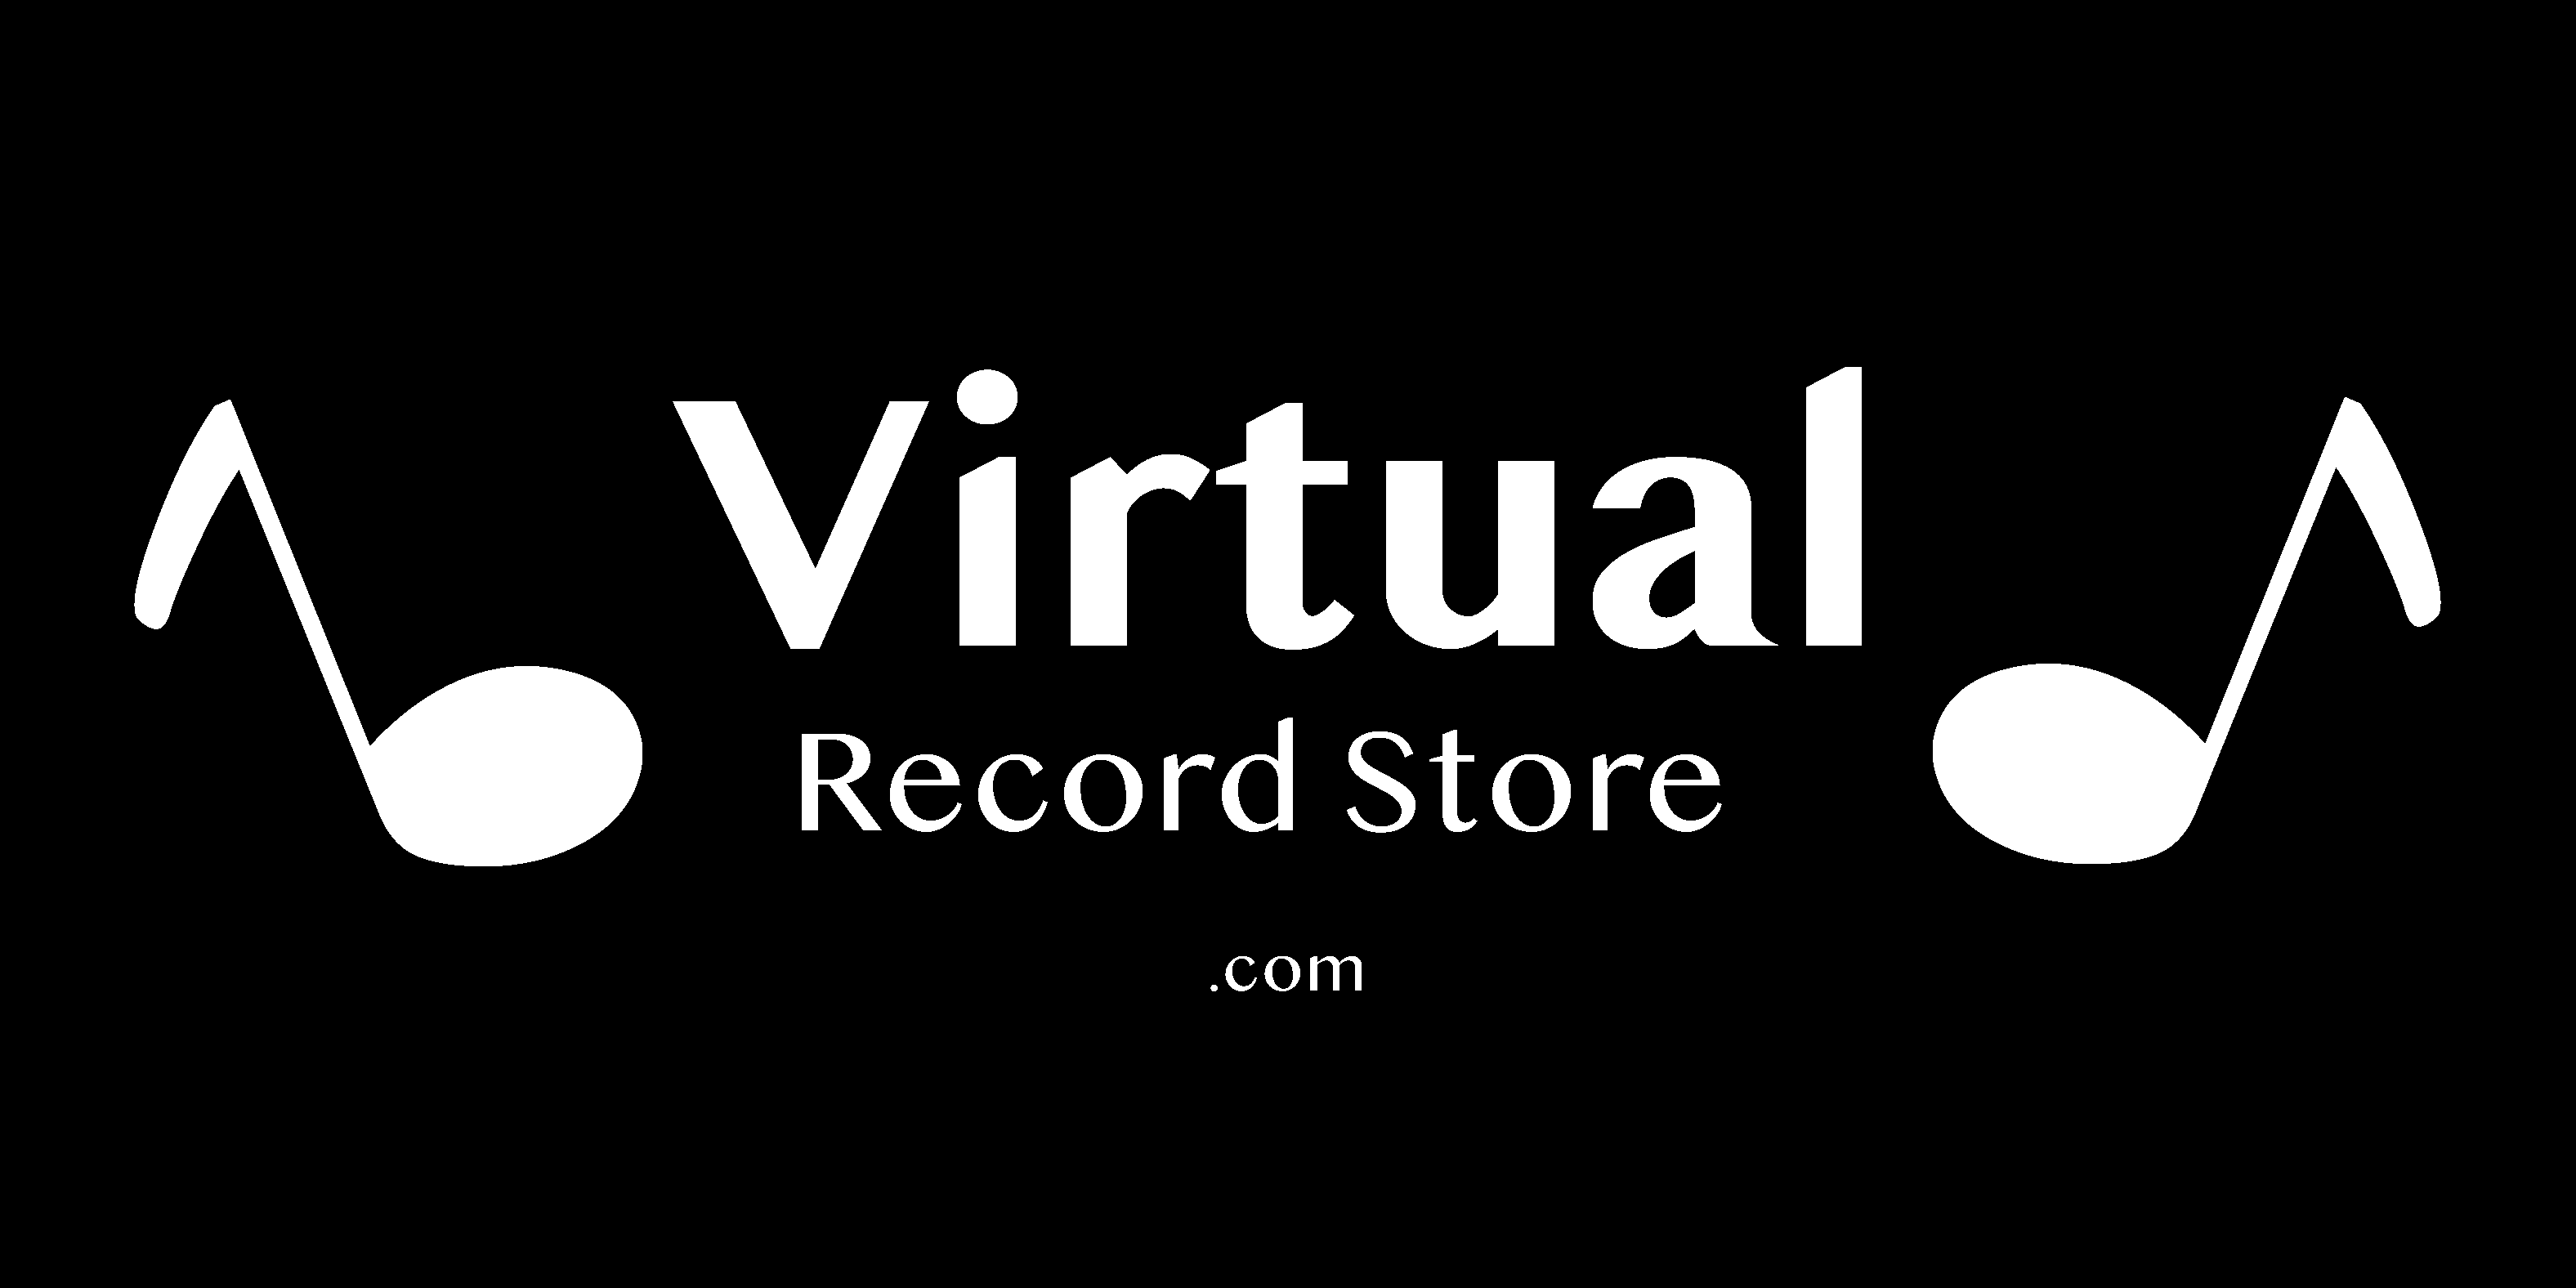 Virtual Record Store logo